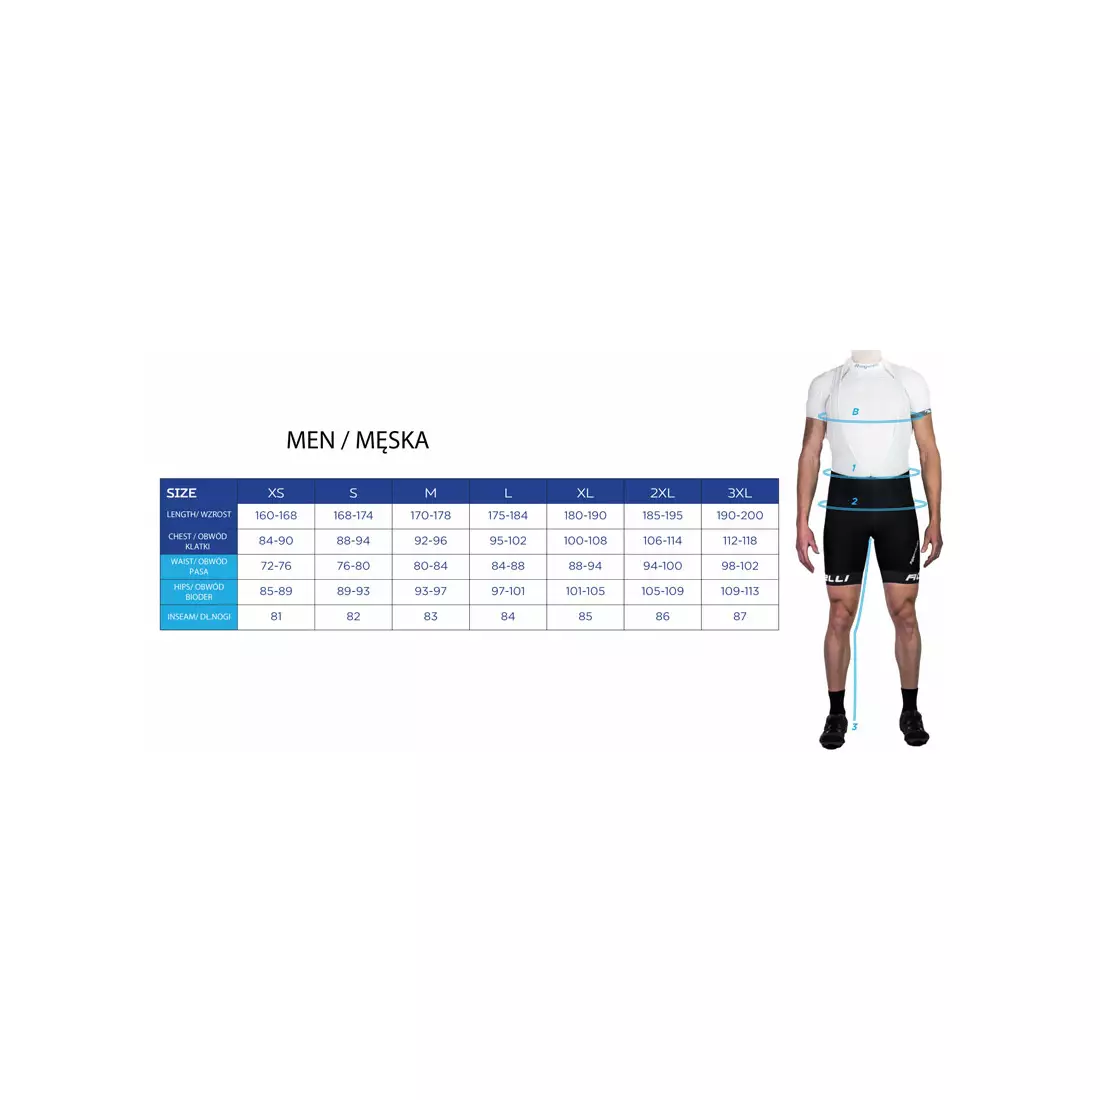 ROGELLI RUN BASIC - férfi futóing, 800.252 - kék